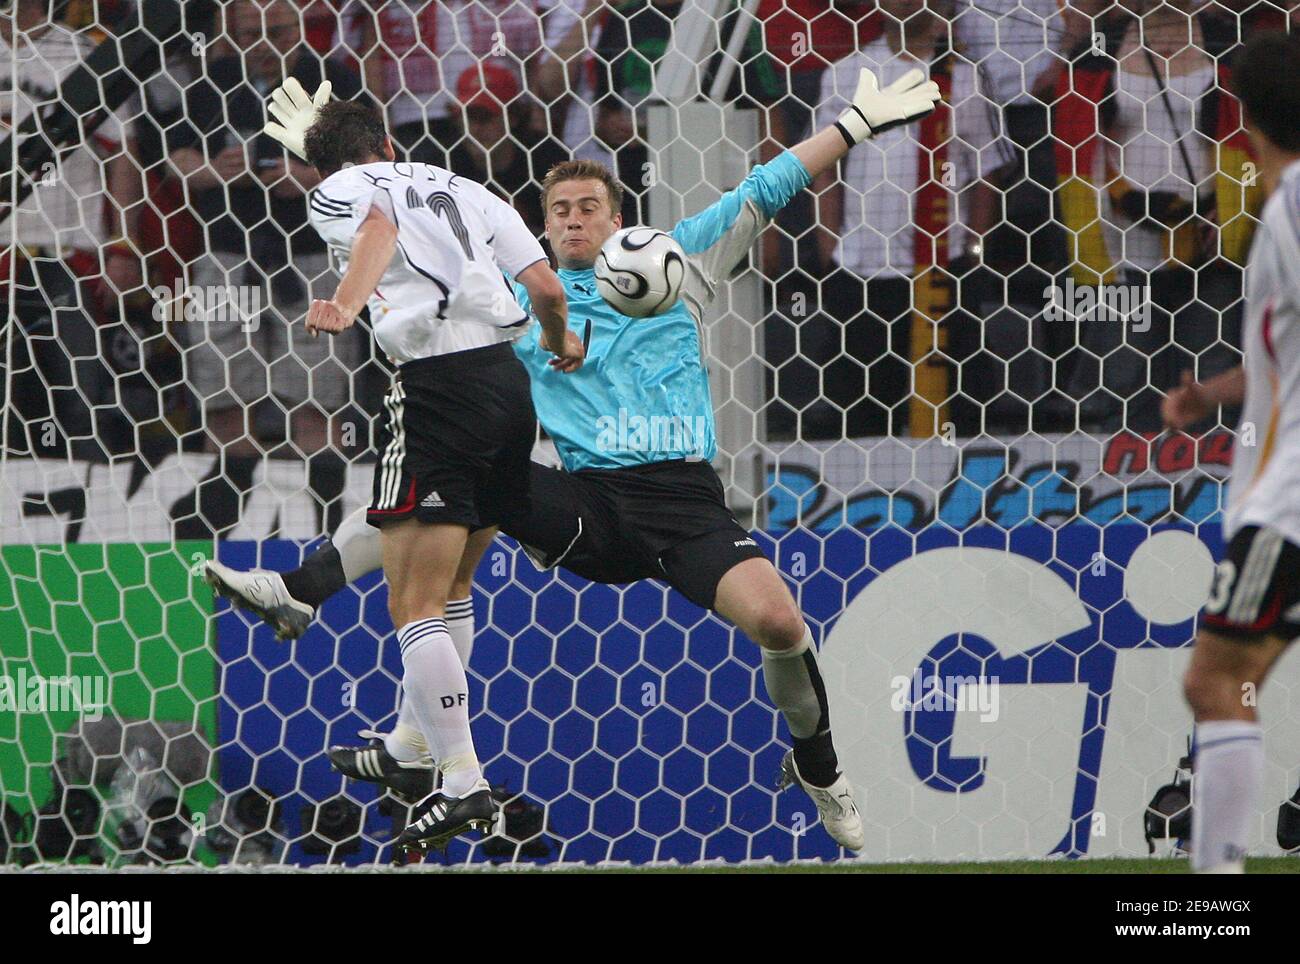 Germany's Miroslav Klose and Poland's goalkeeper Artur Boruc during the World Cup 2006, Germany vs Poland at the Signal Iduna Park stadium in Dortmund, Germany on 14, 2006. Germany won 1-0. Photo by Gouhier-Hahn-Orban/Cameleon/ABACAPRESS.COM Stock Photo